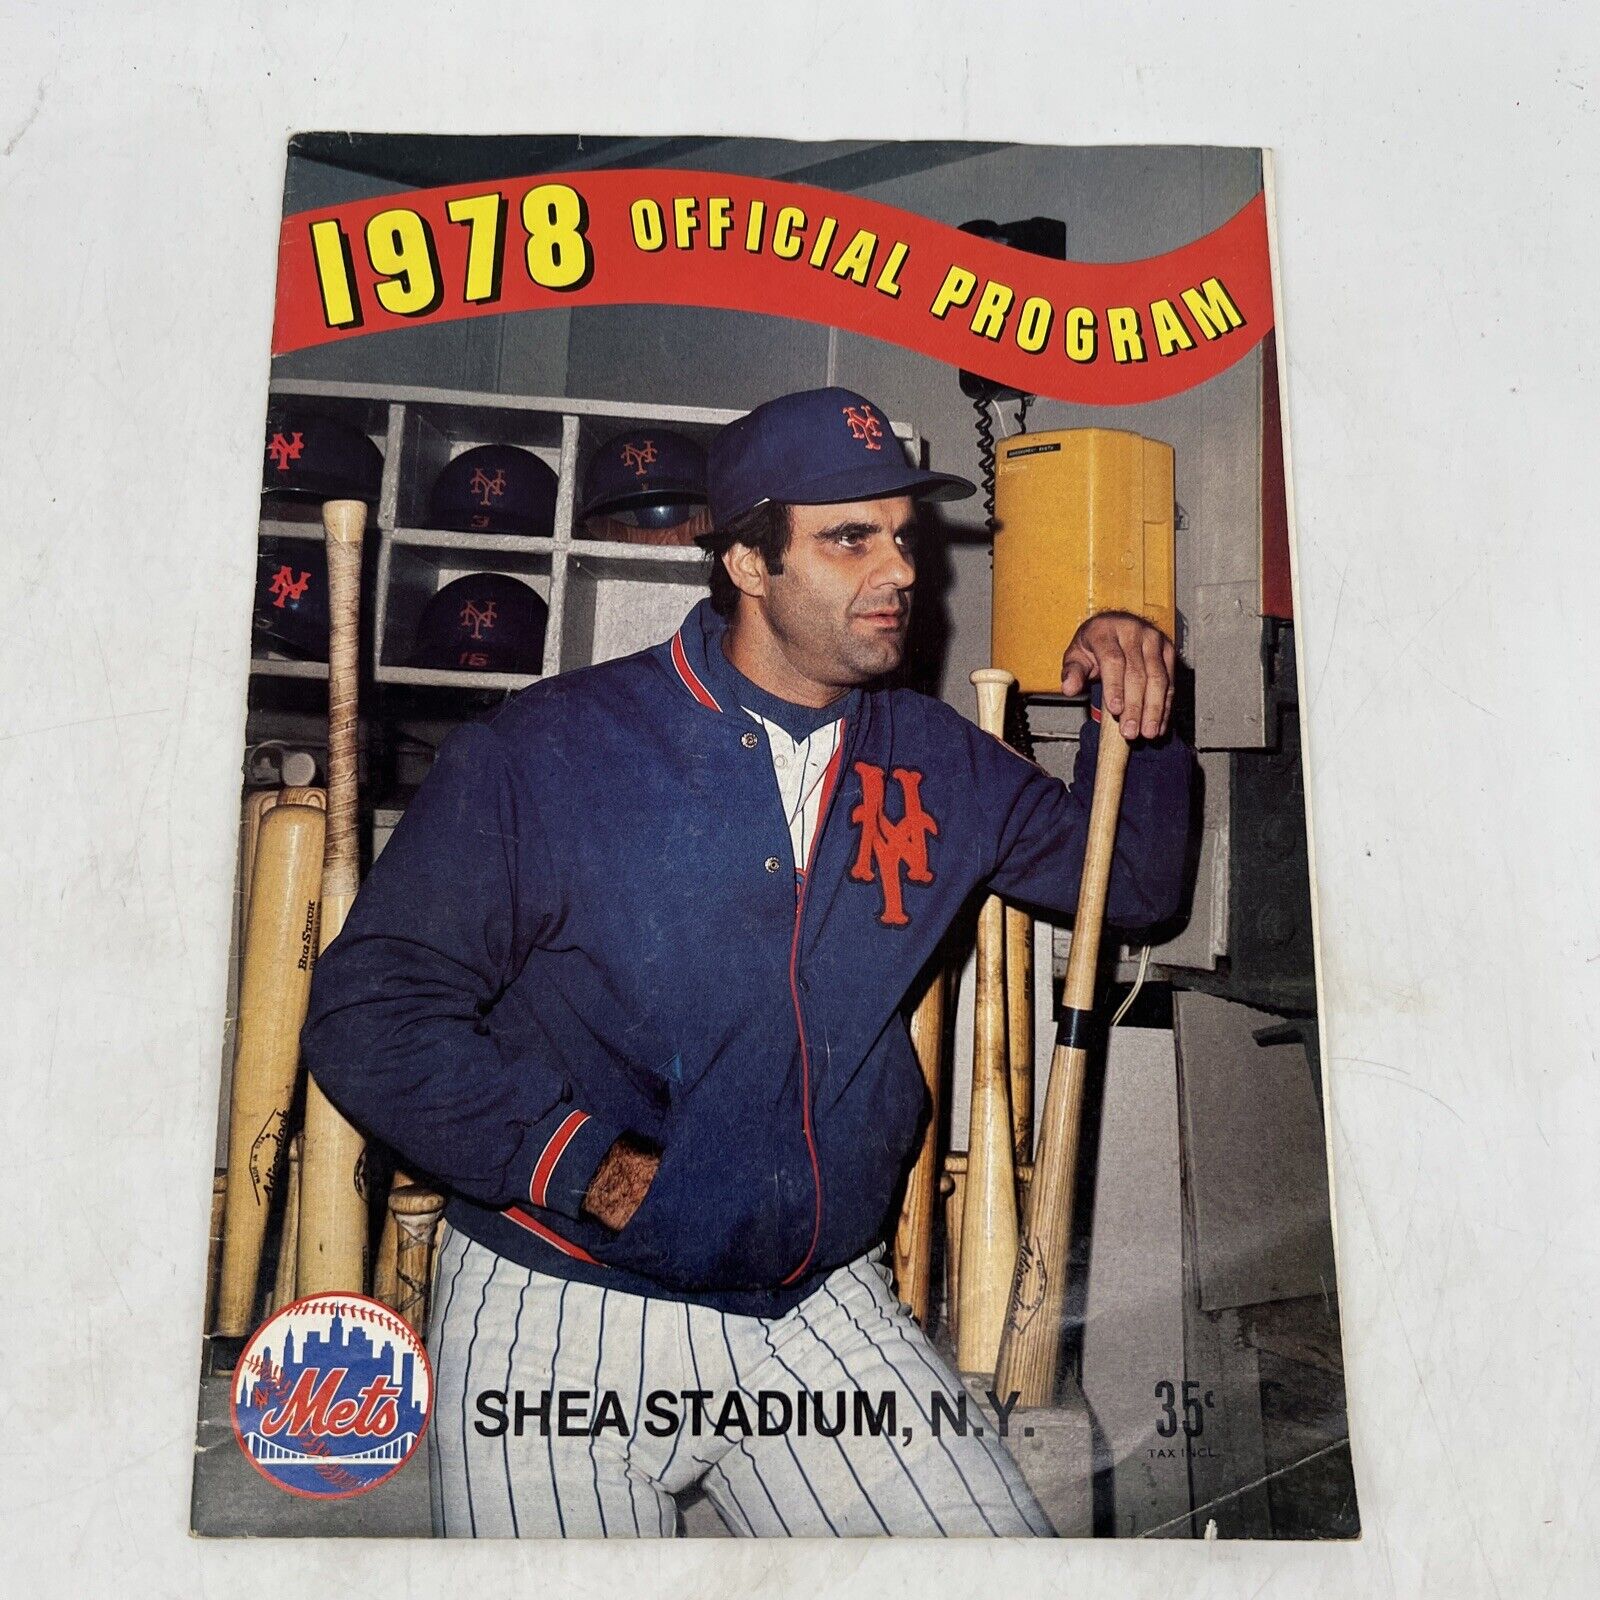 1978 NY Mets Official Program - Joe Torre - VG Condition